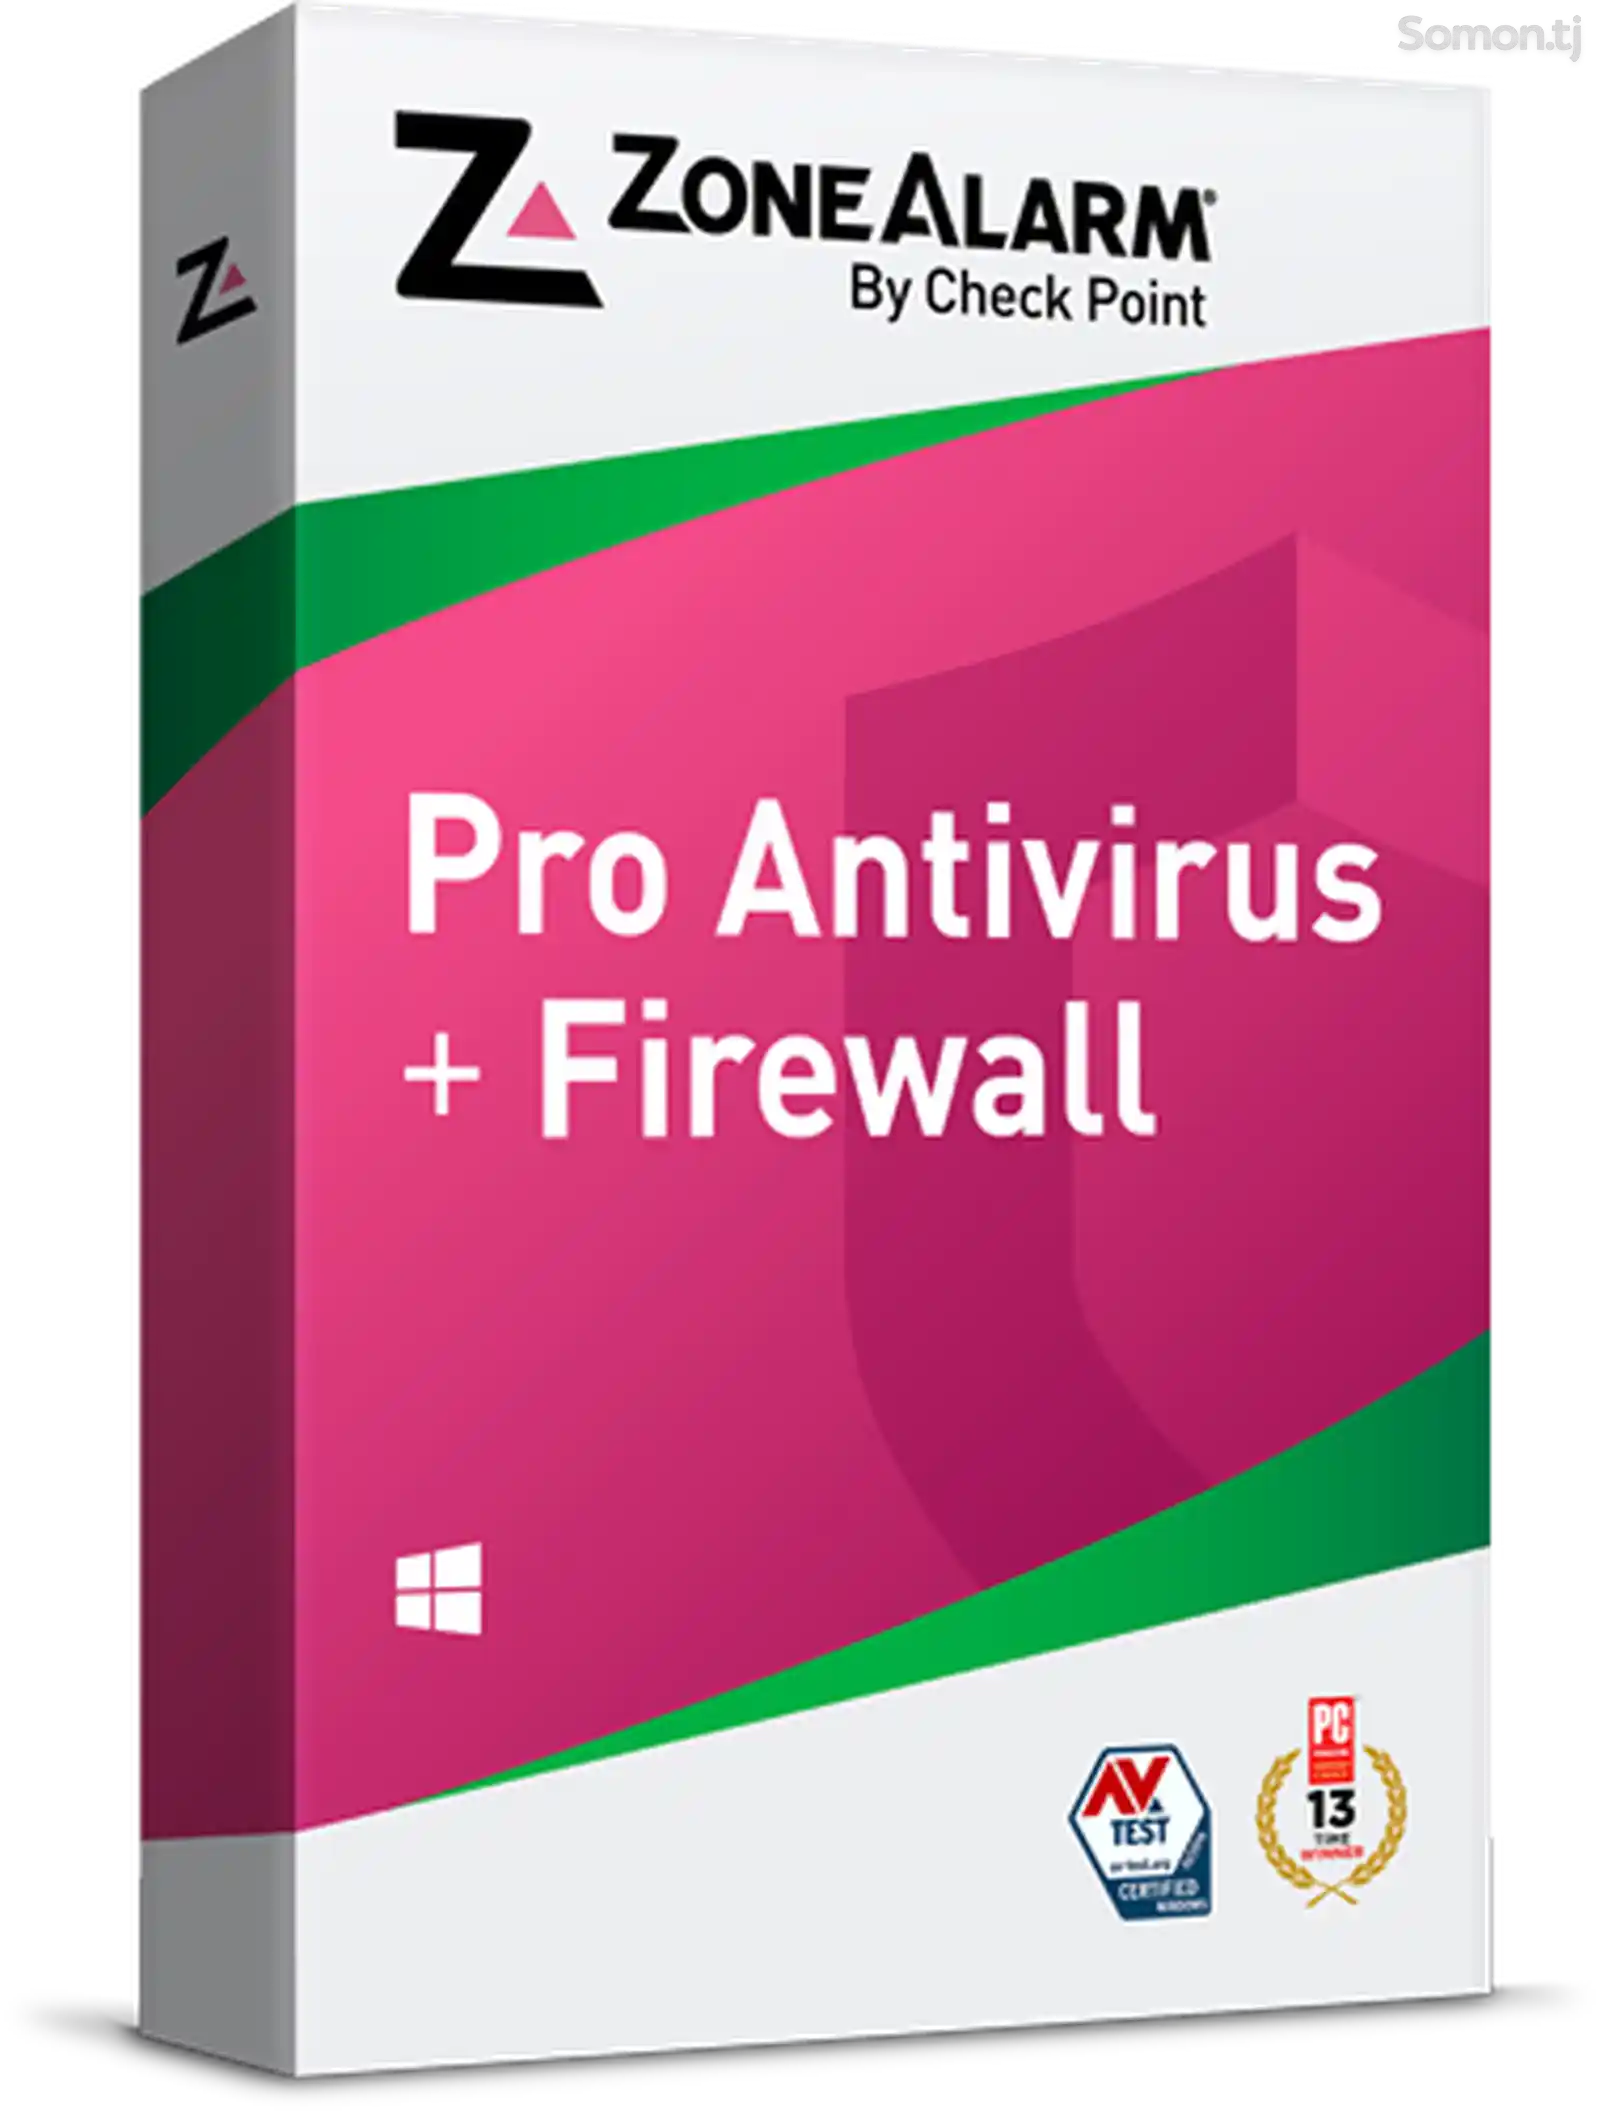 ZoneAlarm Pro Antivirus Firewall - иҷозатнома барои 5 роёна, 1 сол